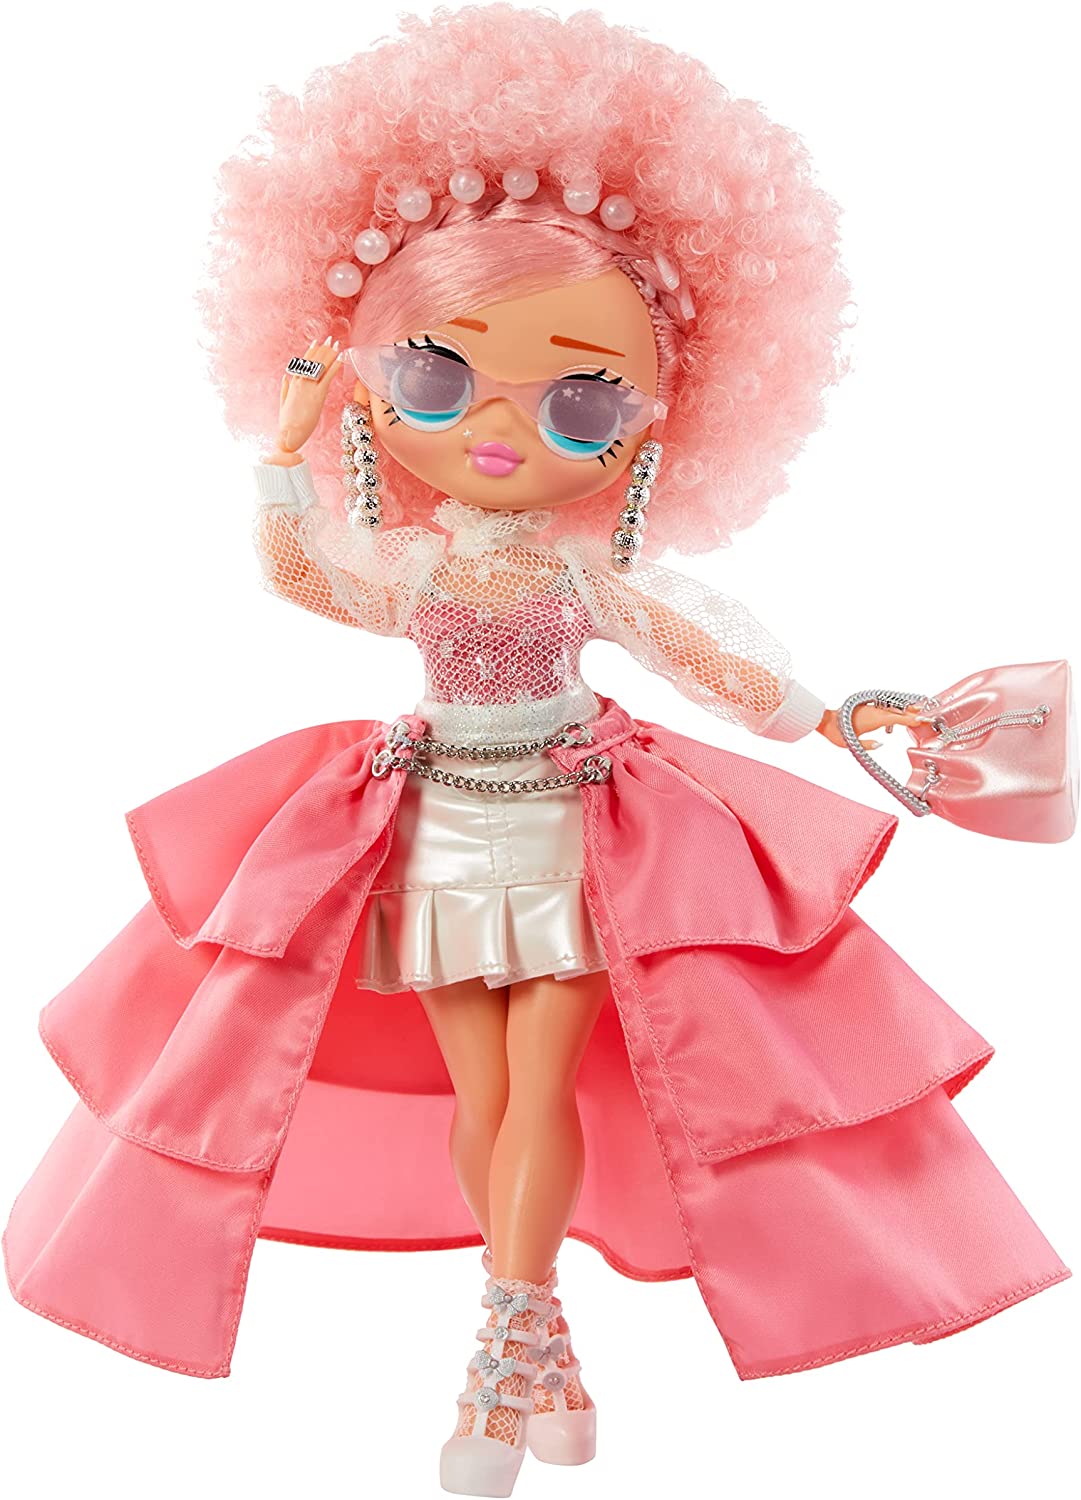 LOL Surprise Present Surprise Miss Celebrate Fashion Doll